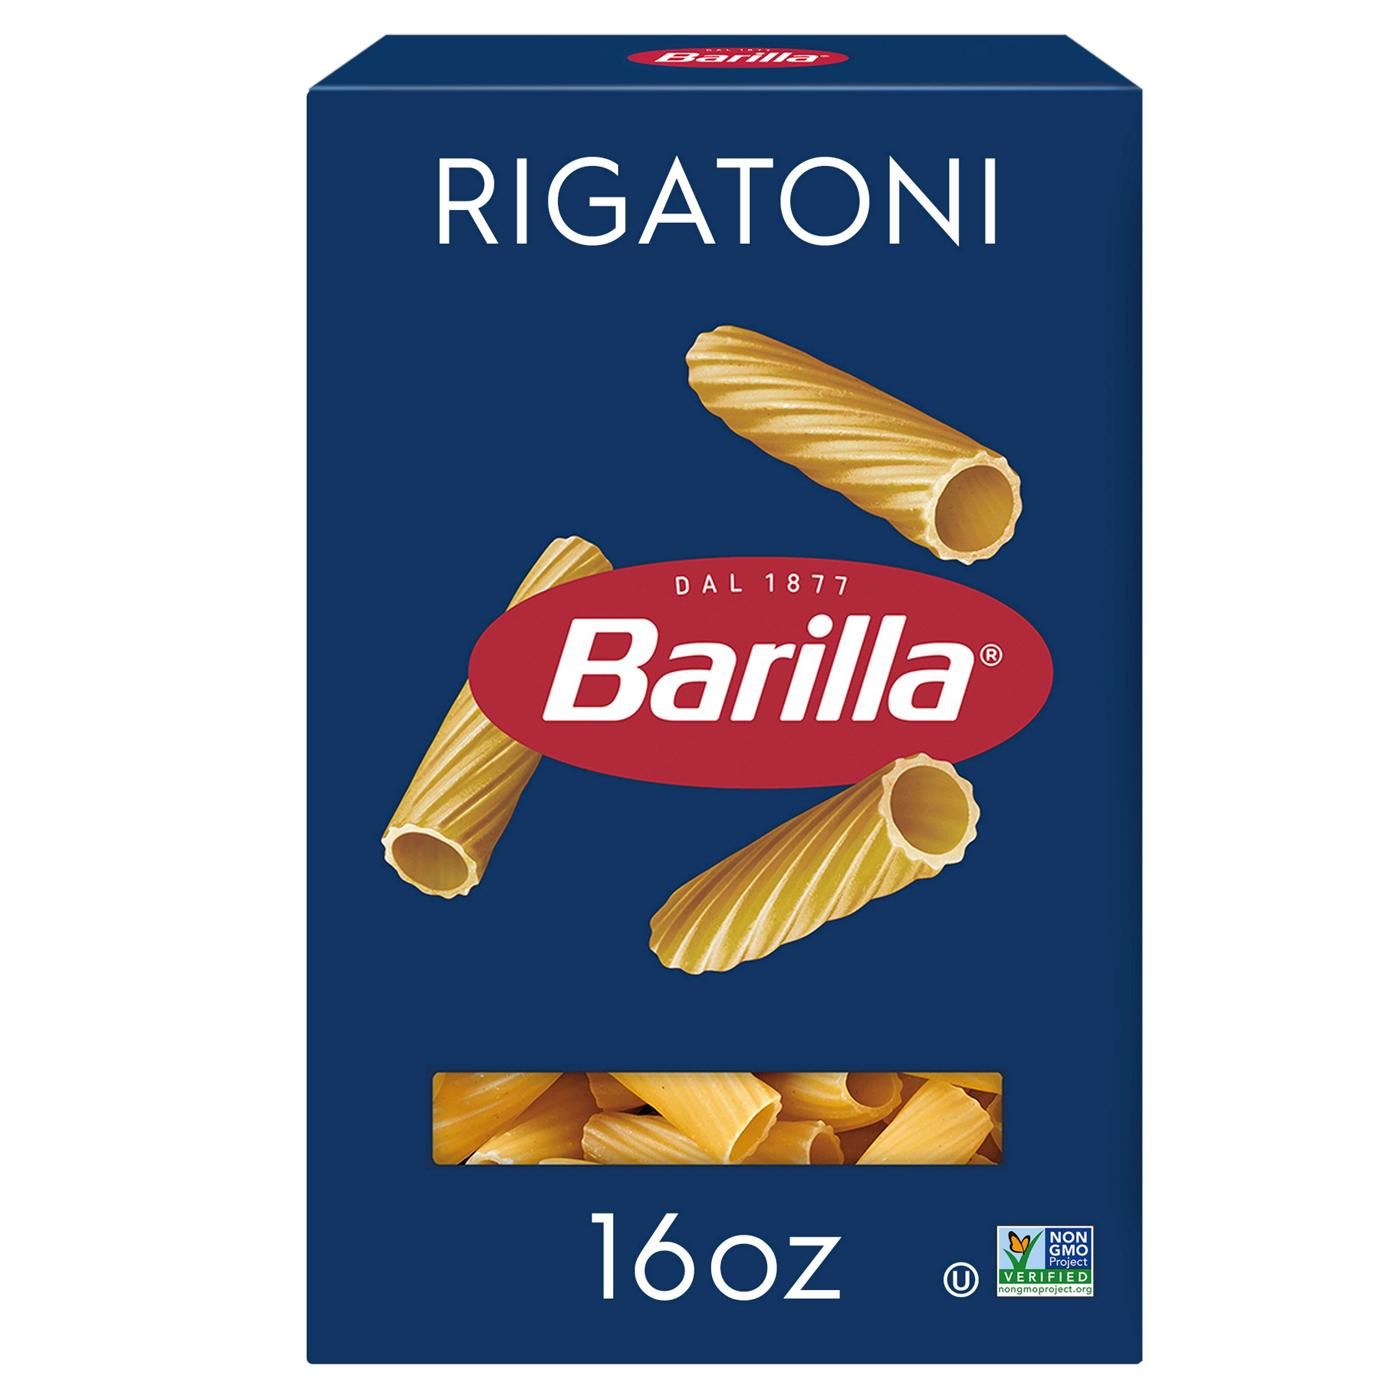 Barilla Rigatoni Pasta; image 1 of 6